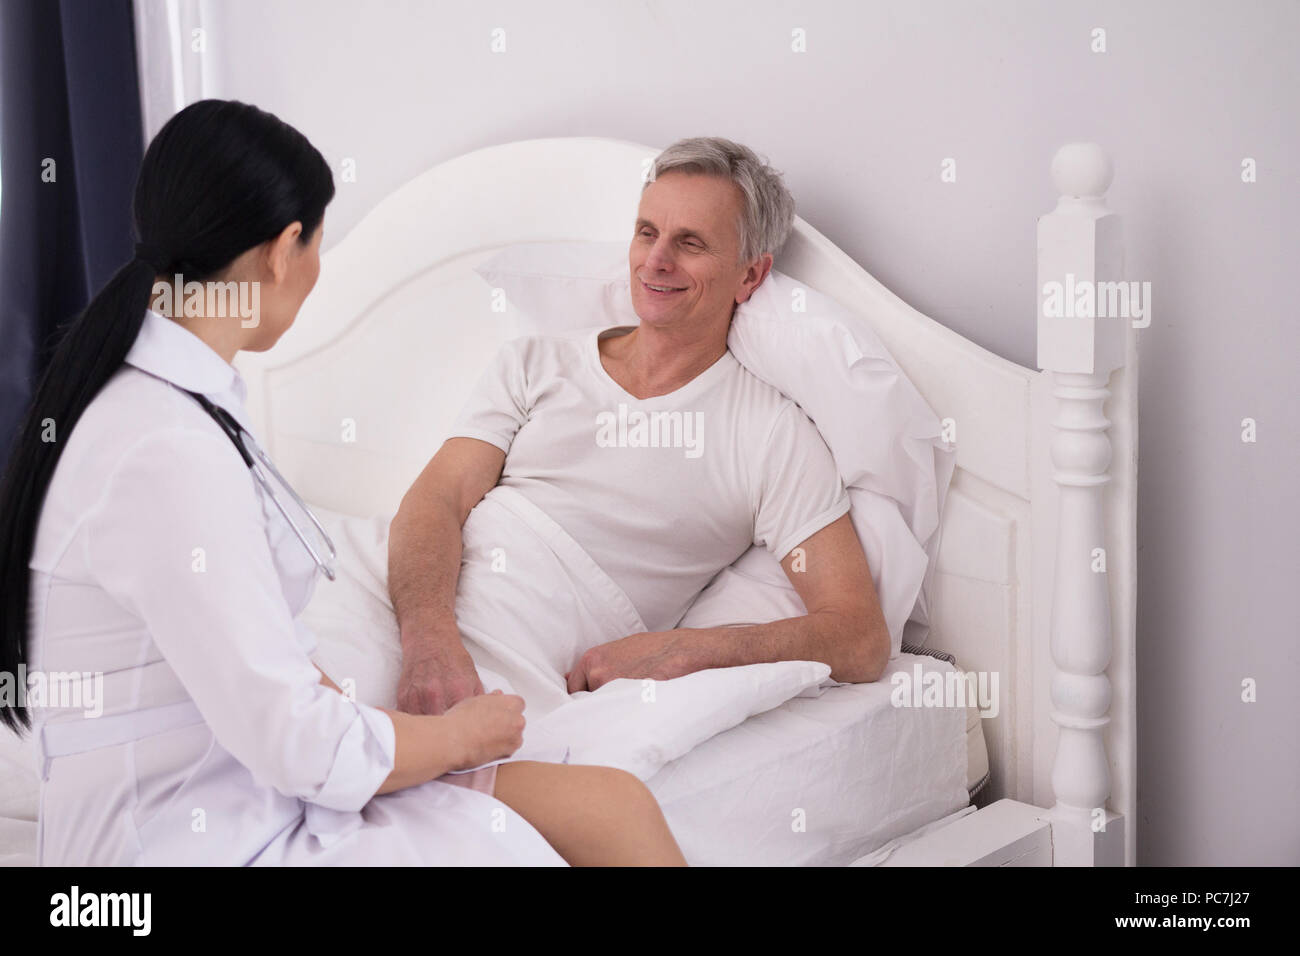 Активно заболевшие. Врач возле кровати. Медсестра около кровати. Врач возле кровати пациента. Медсестра у кровати пациента.